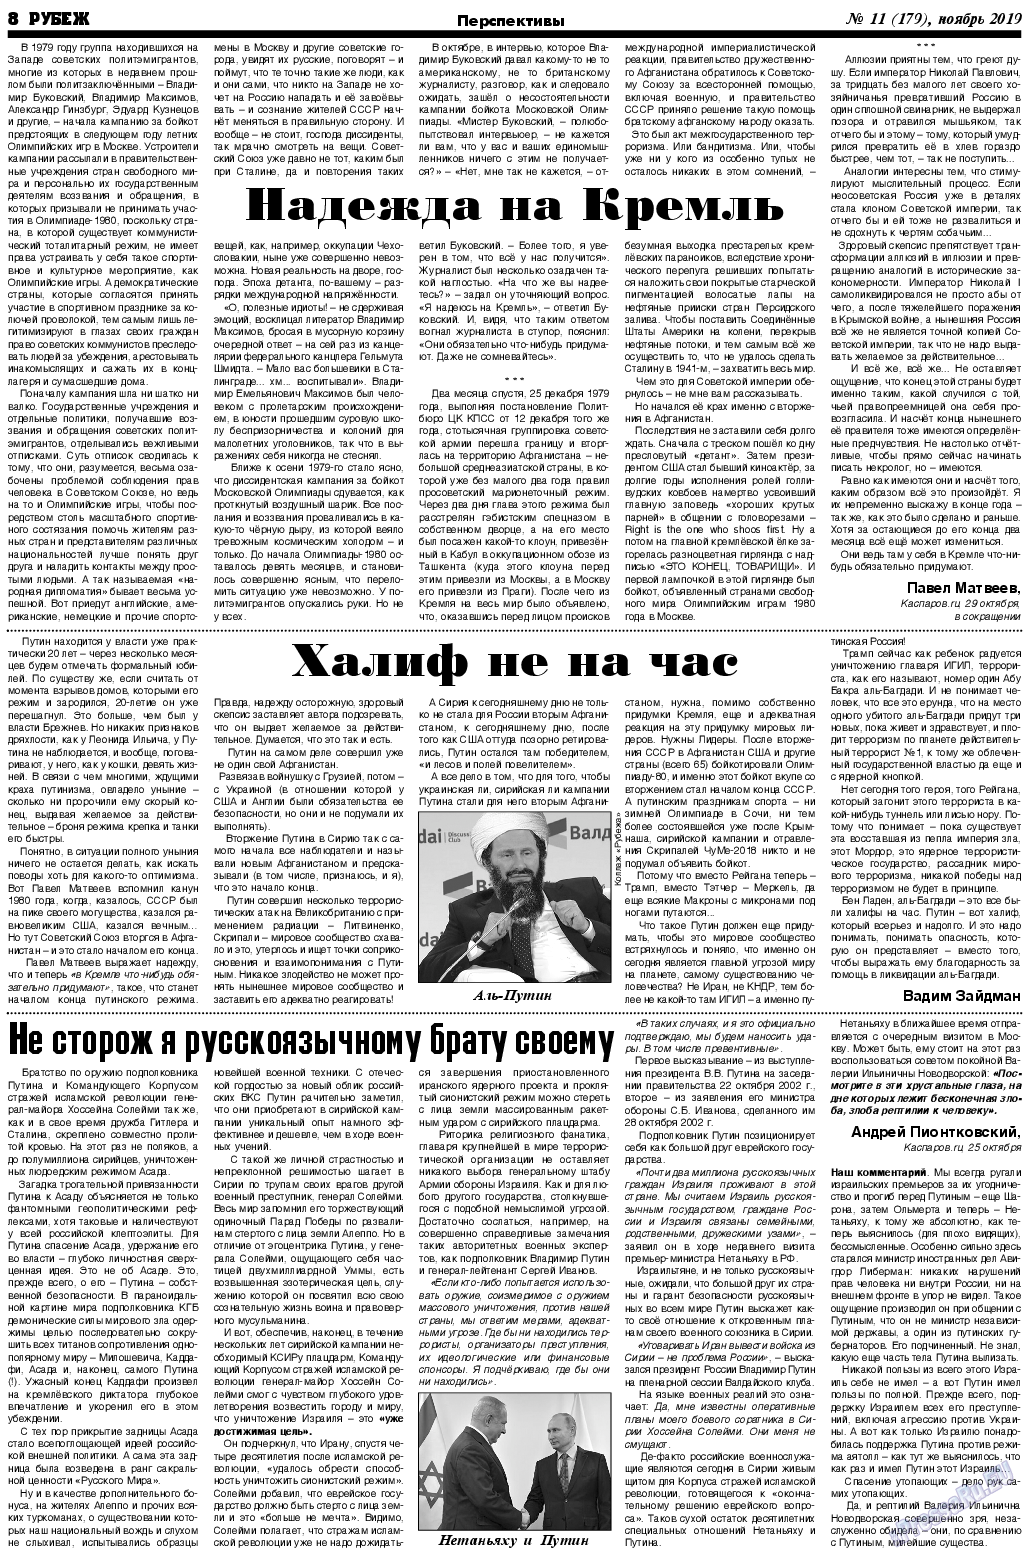 Рубеж, газета. 2019 №11 стр.8